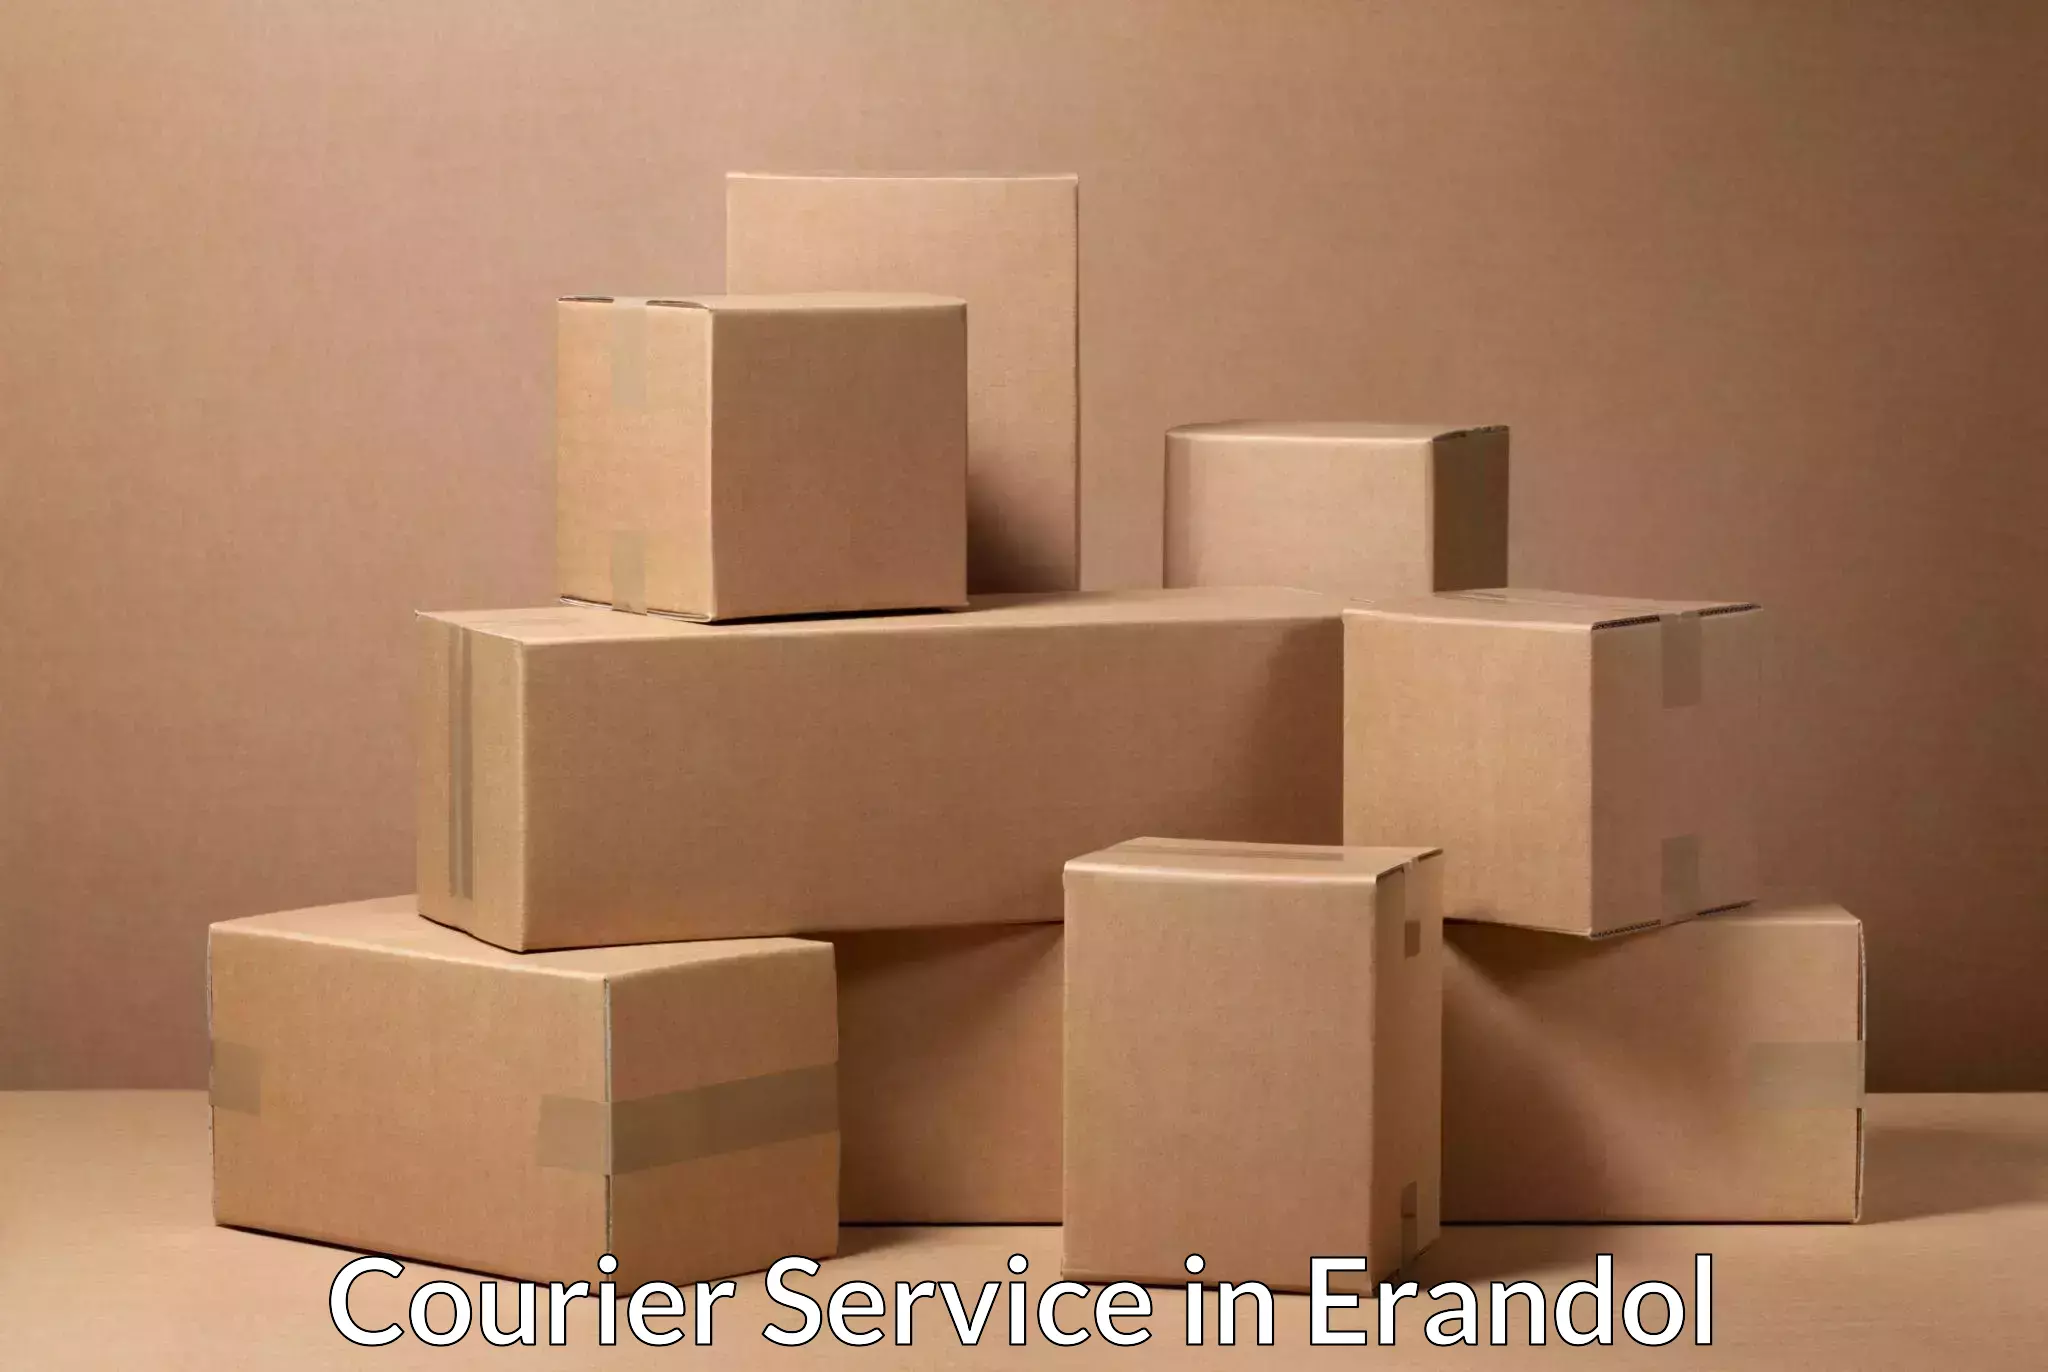 Streamlined delivery processes in Erandol